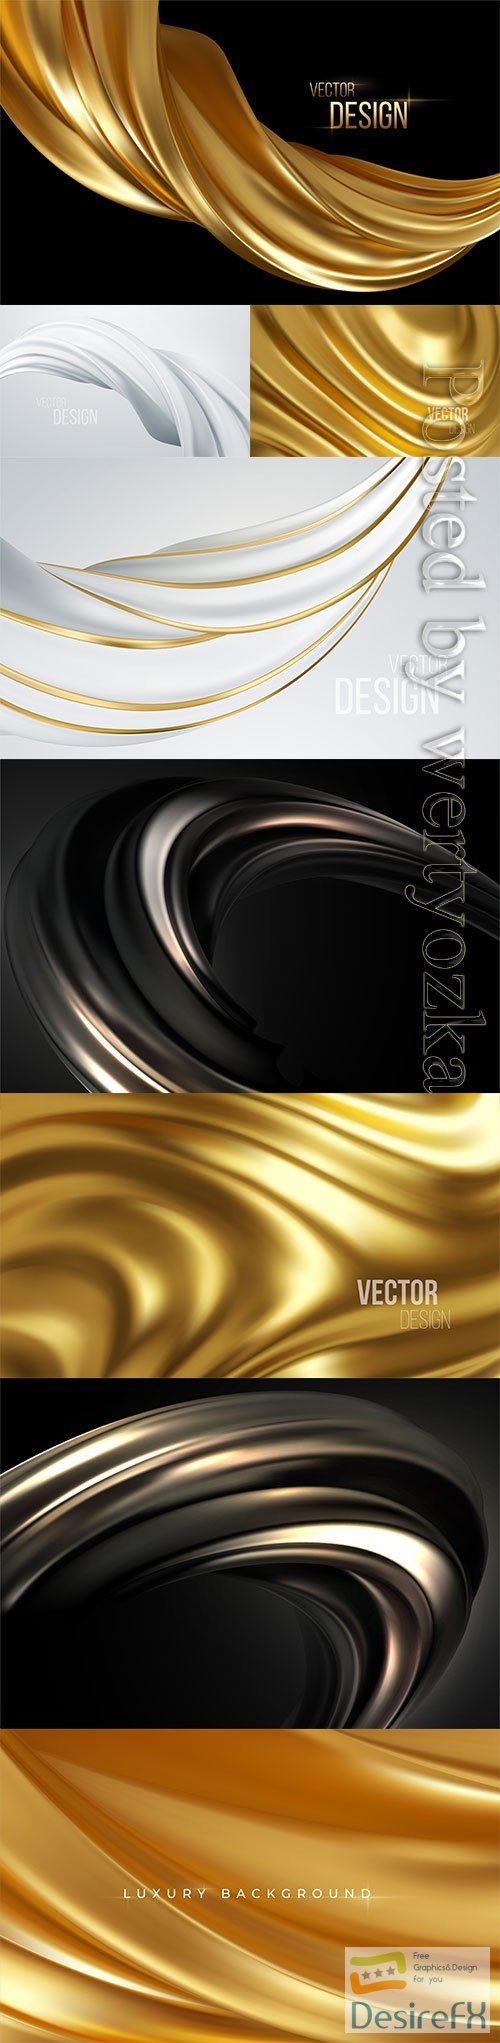 Gold metallic silk flowing wave luxury vector background